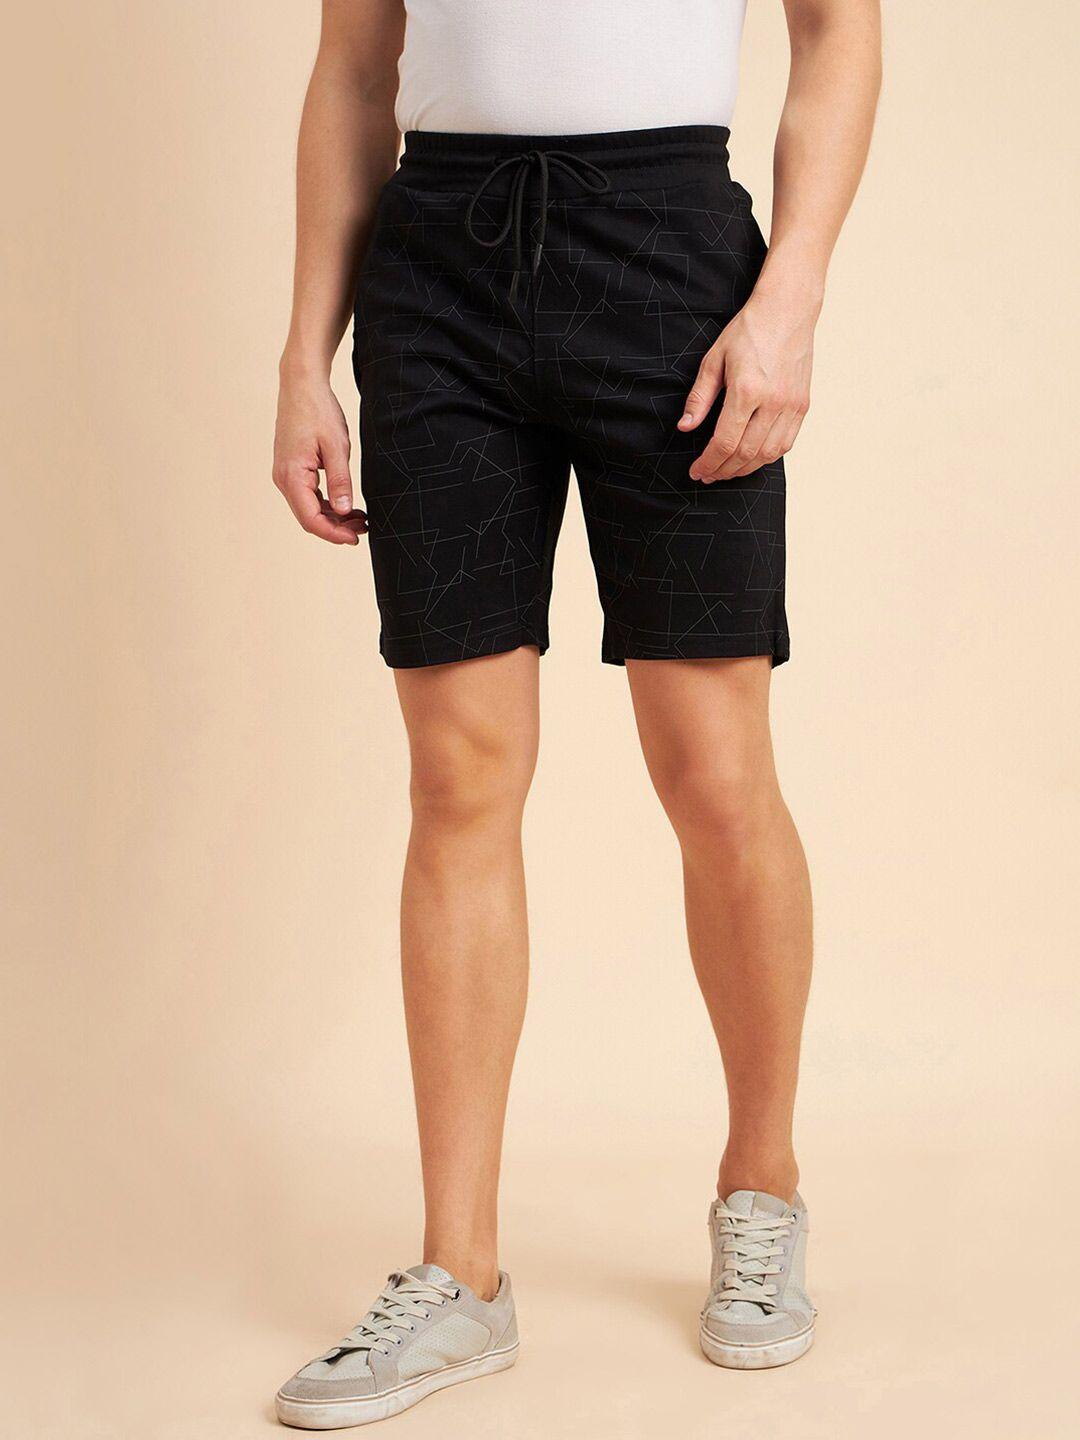 sweet-dreams-men-black-mid-rise-geometric-printed-shorts